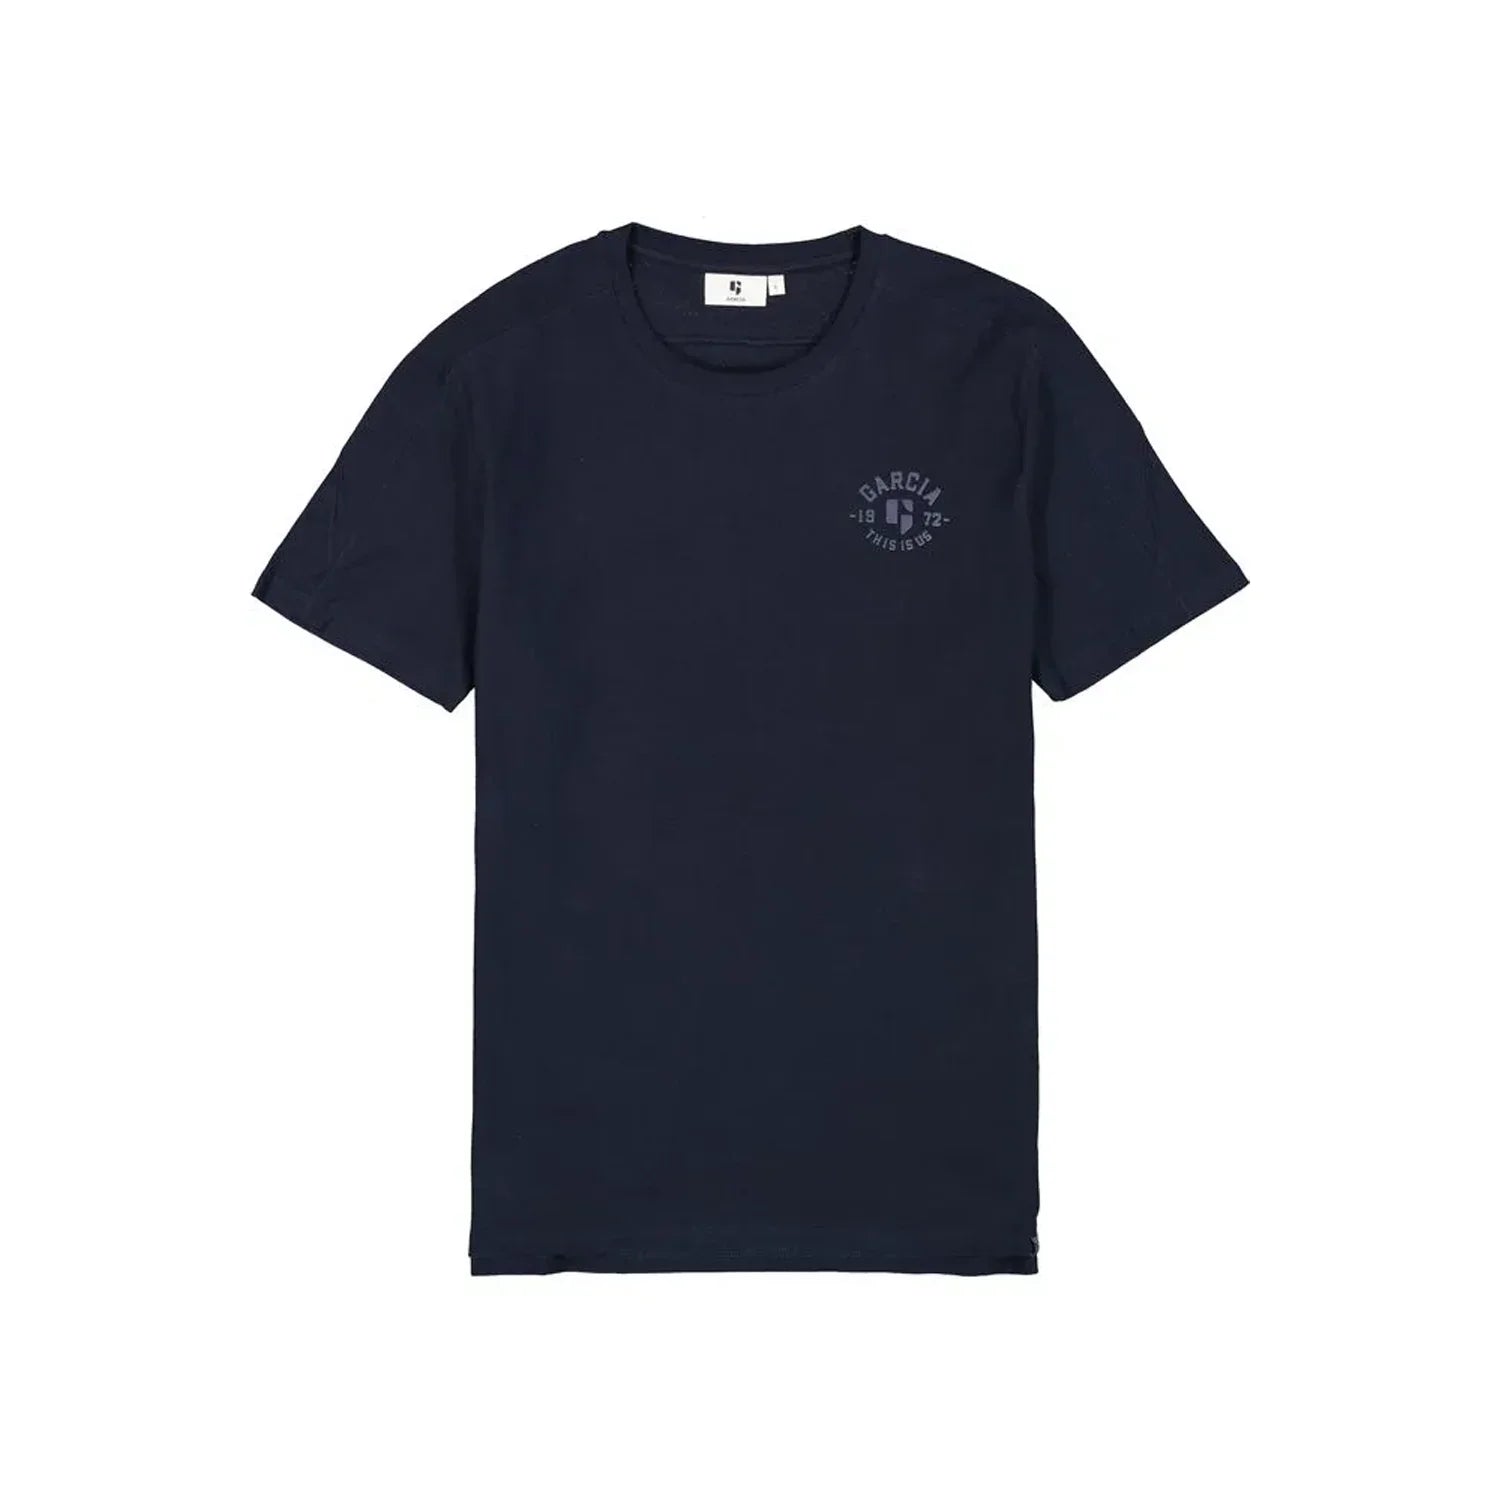 'Garcia N41205 Short Sleeve T-Shirt' in 'Dark Moon' colour